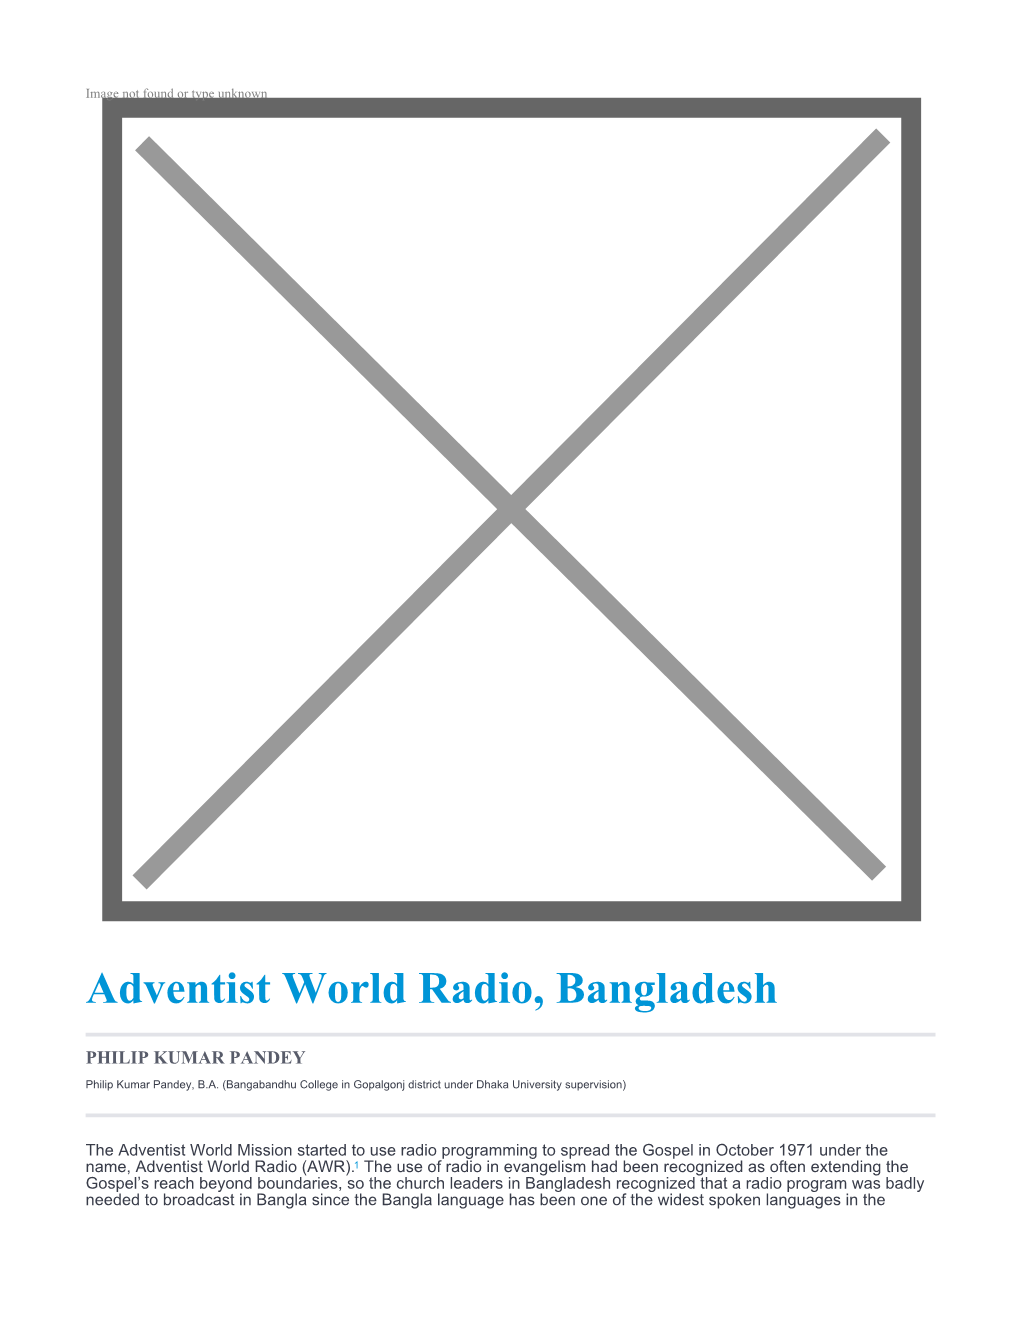 Adventist World Radio, Bangladesh